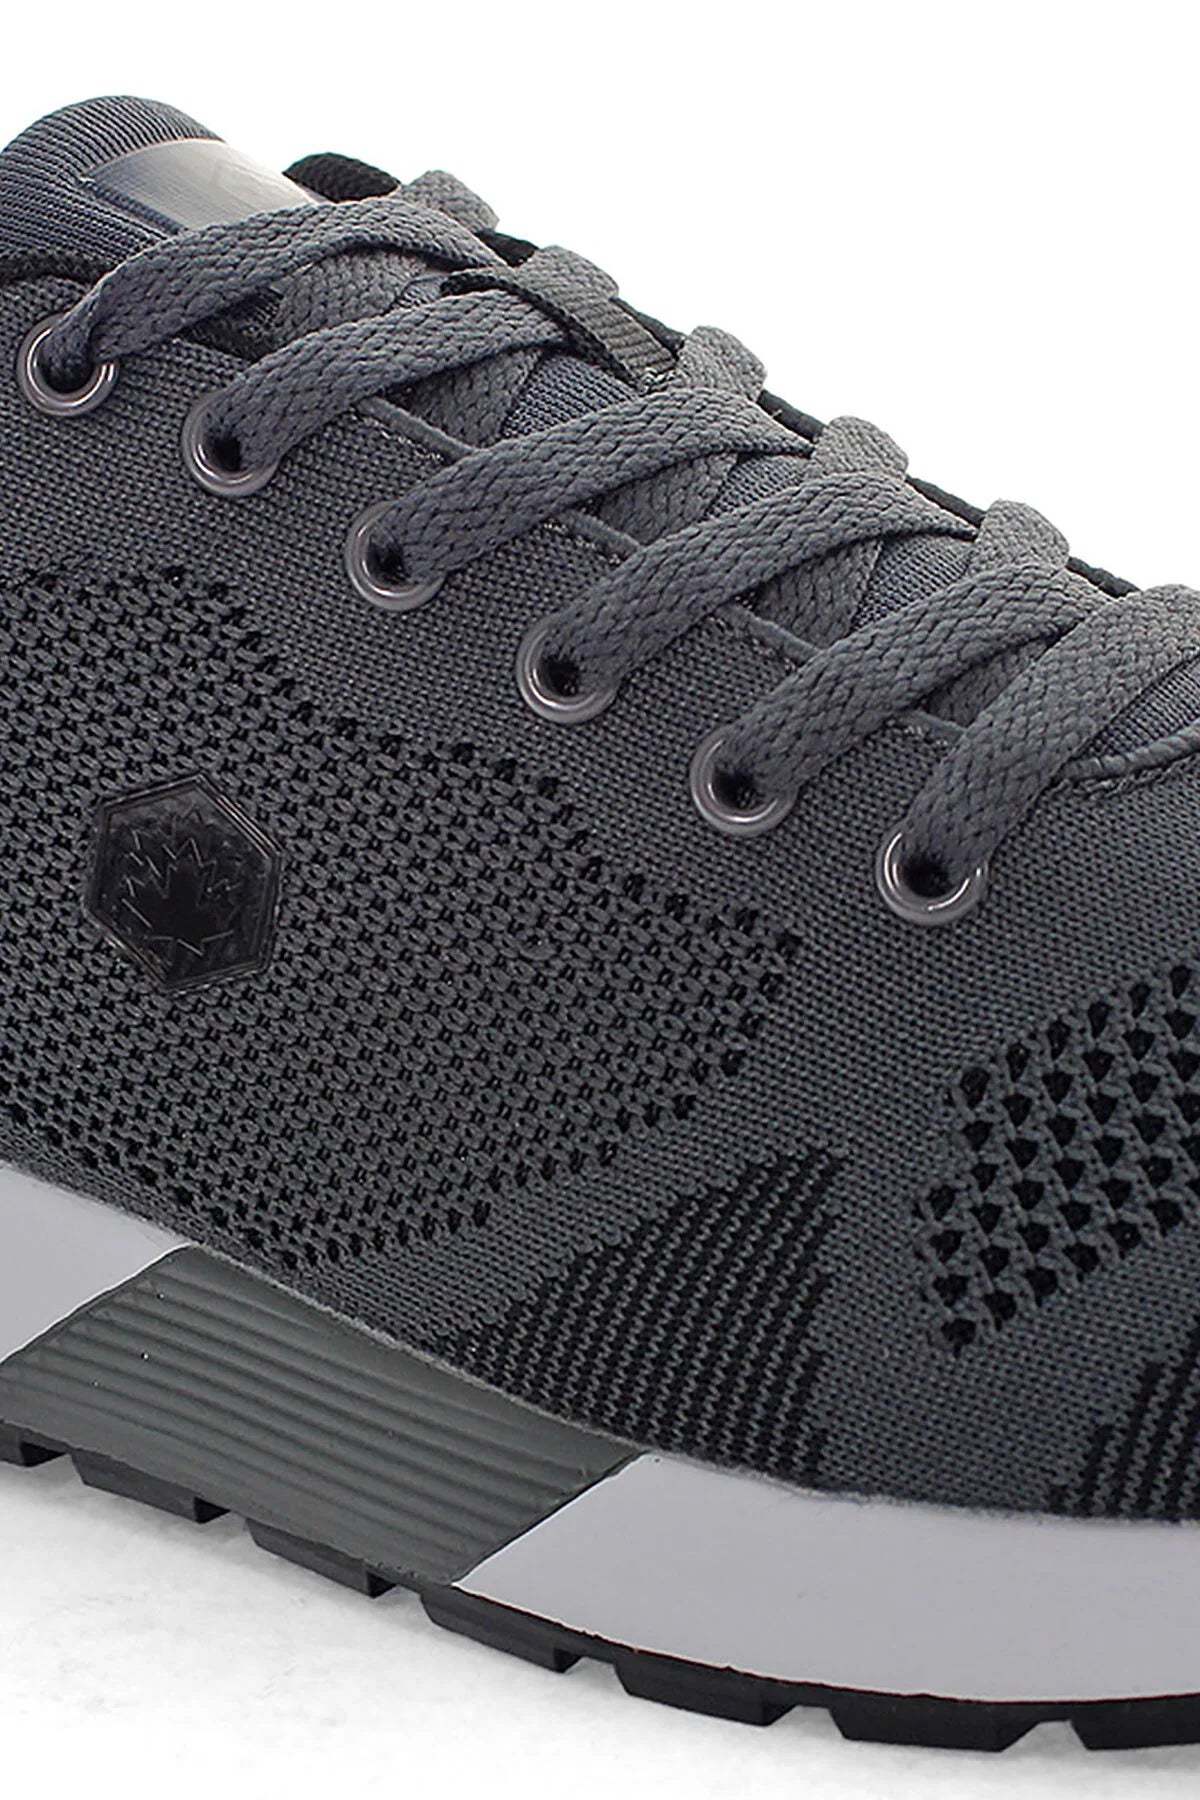 Lumberjack SM62111-003 Vendor sneakers uomo dark grey/black